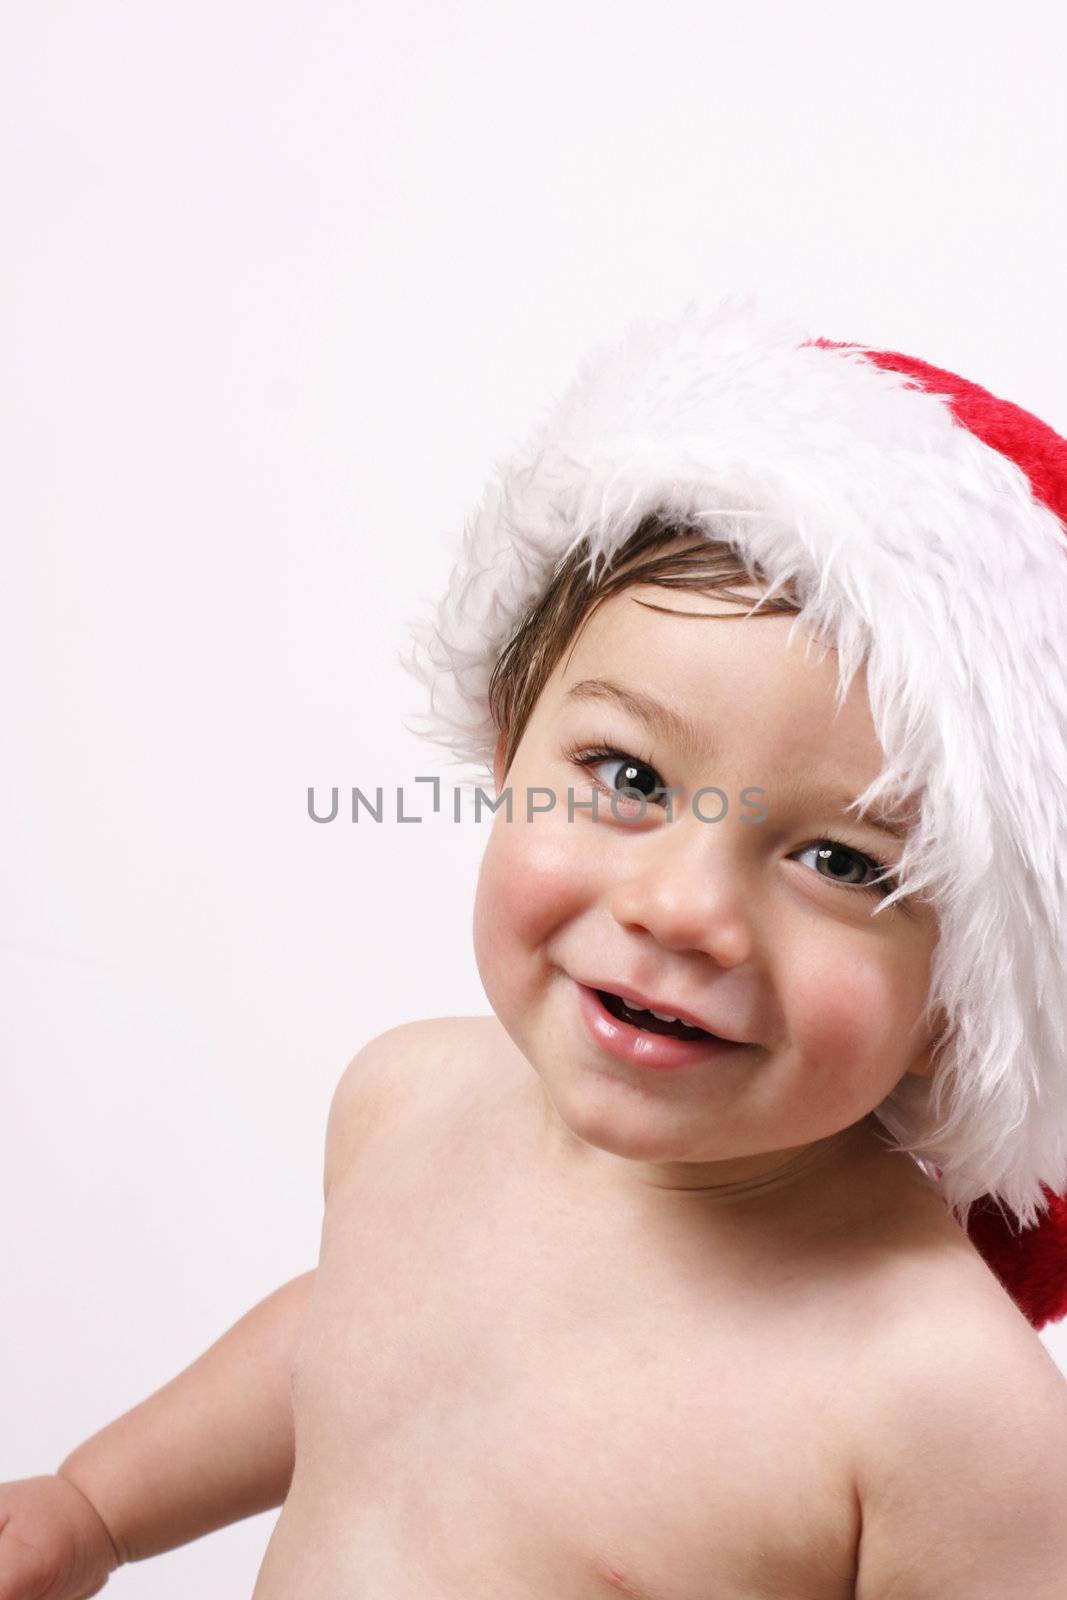 Ho Ho Ho, Merry Christmas
Beautiful  15 momths old boy in santa hat